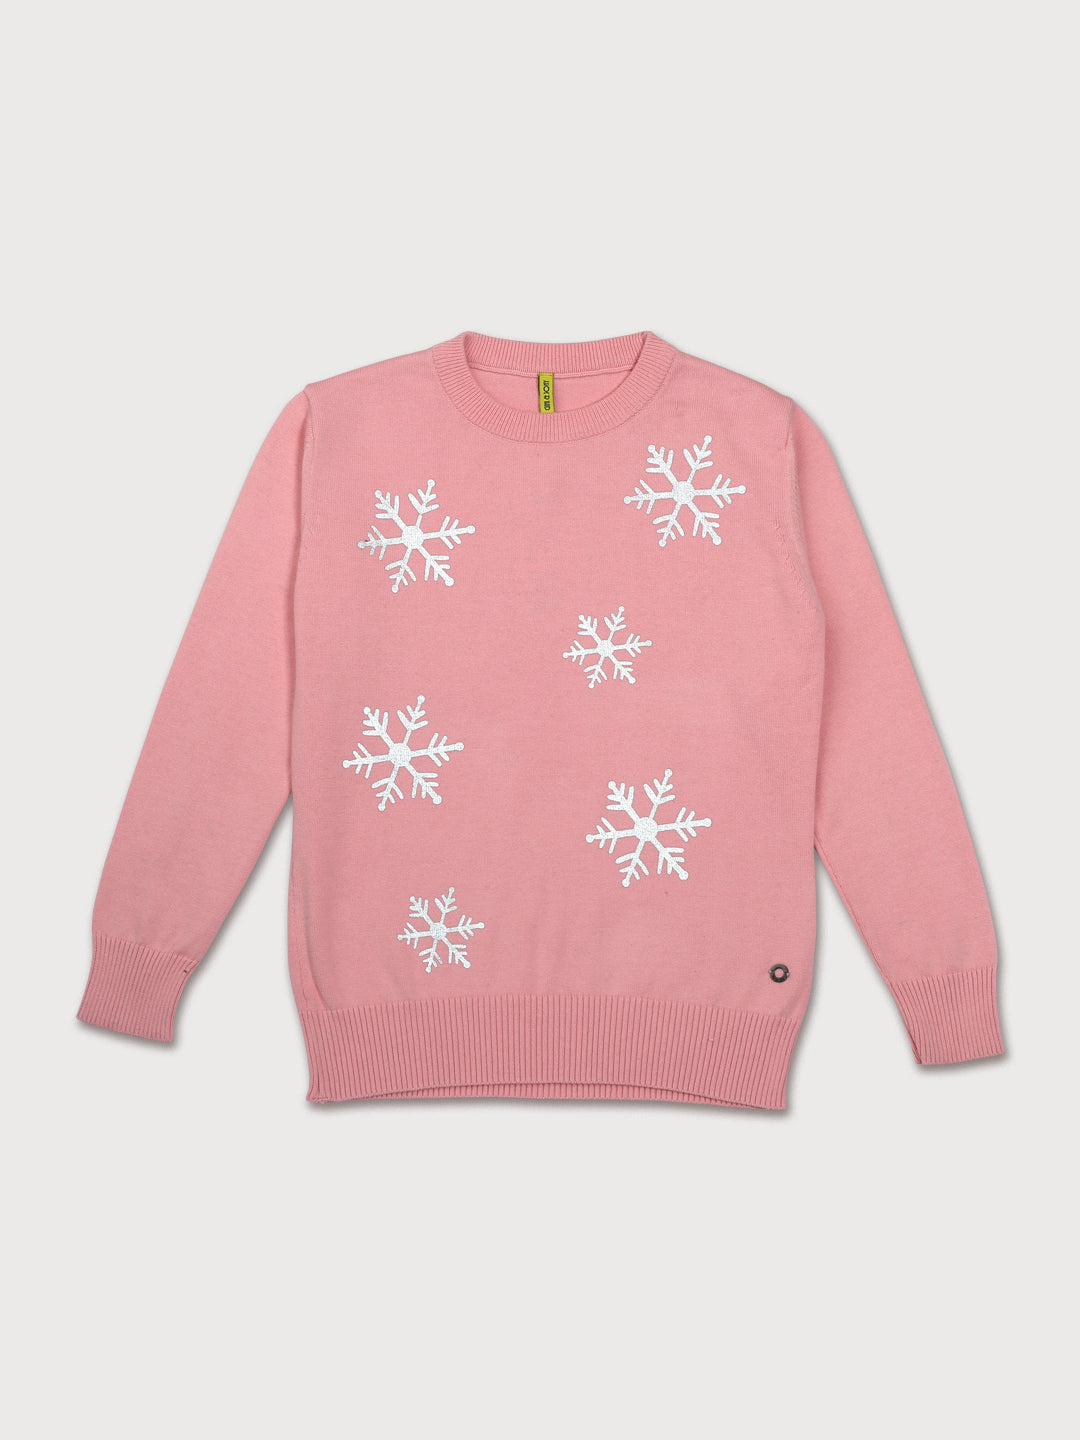 Girls Pink Cotton Printed Full Sleeves Sweater